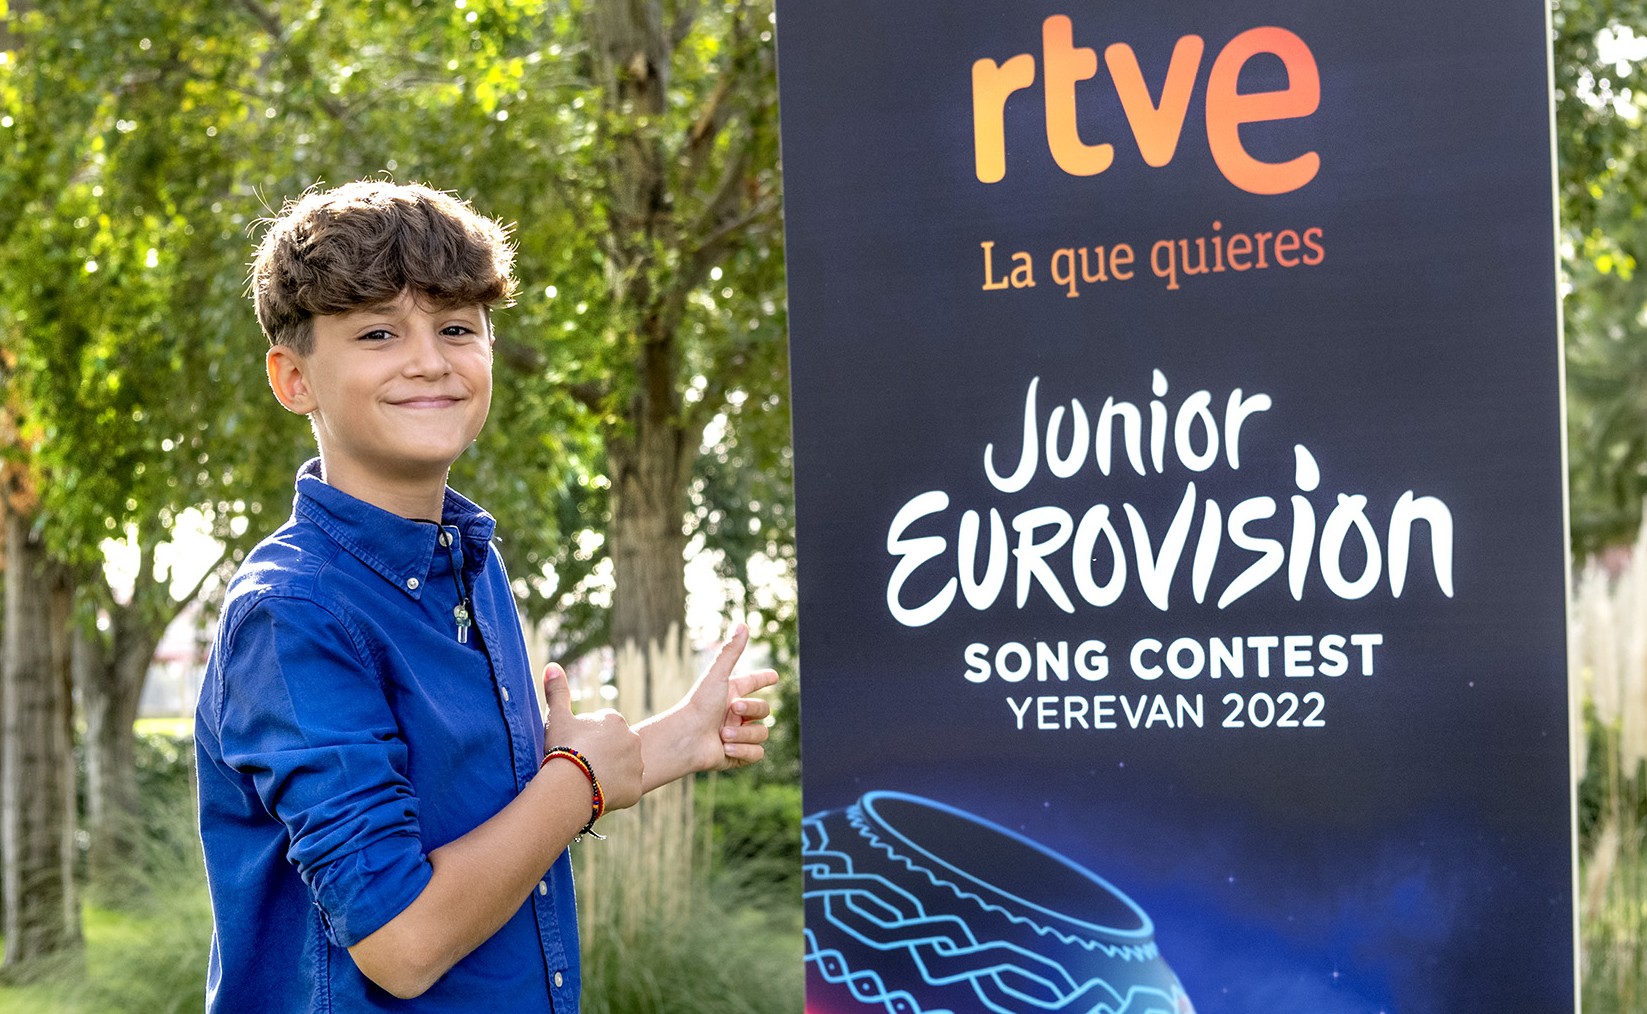 Rueda Eurovision Junior Carlos Higes (2)